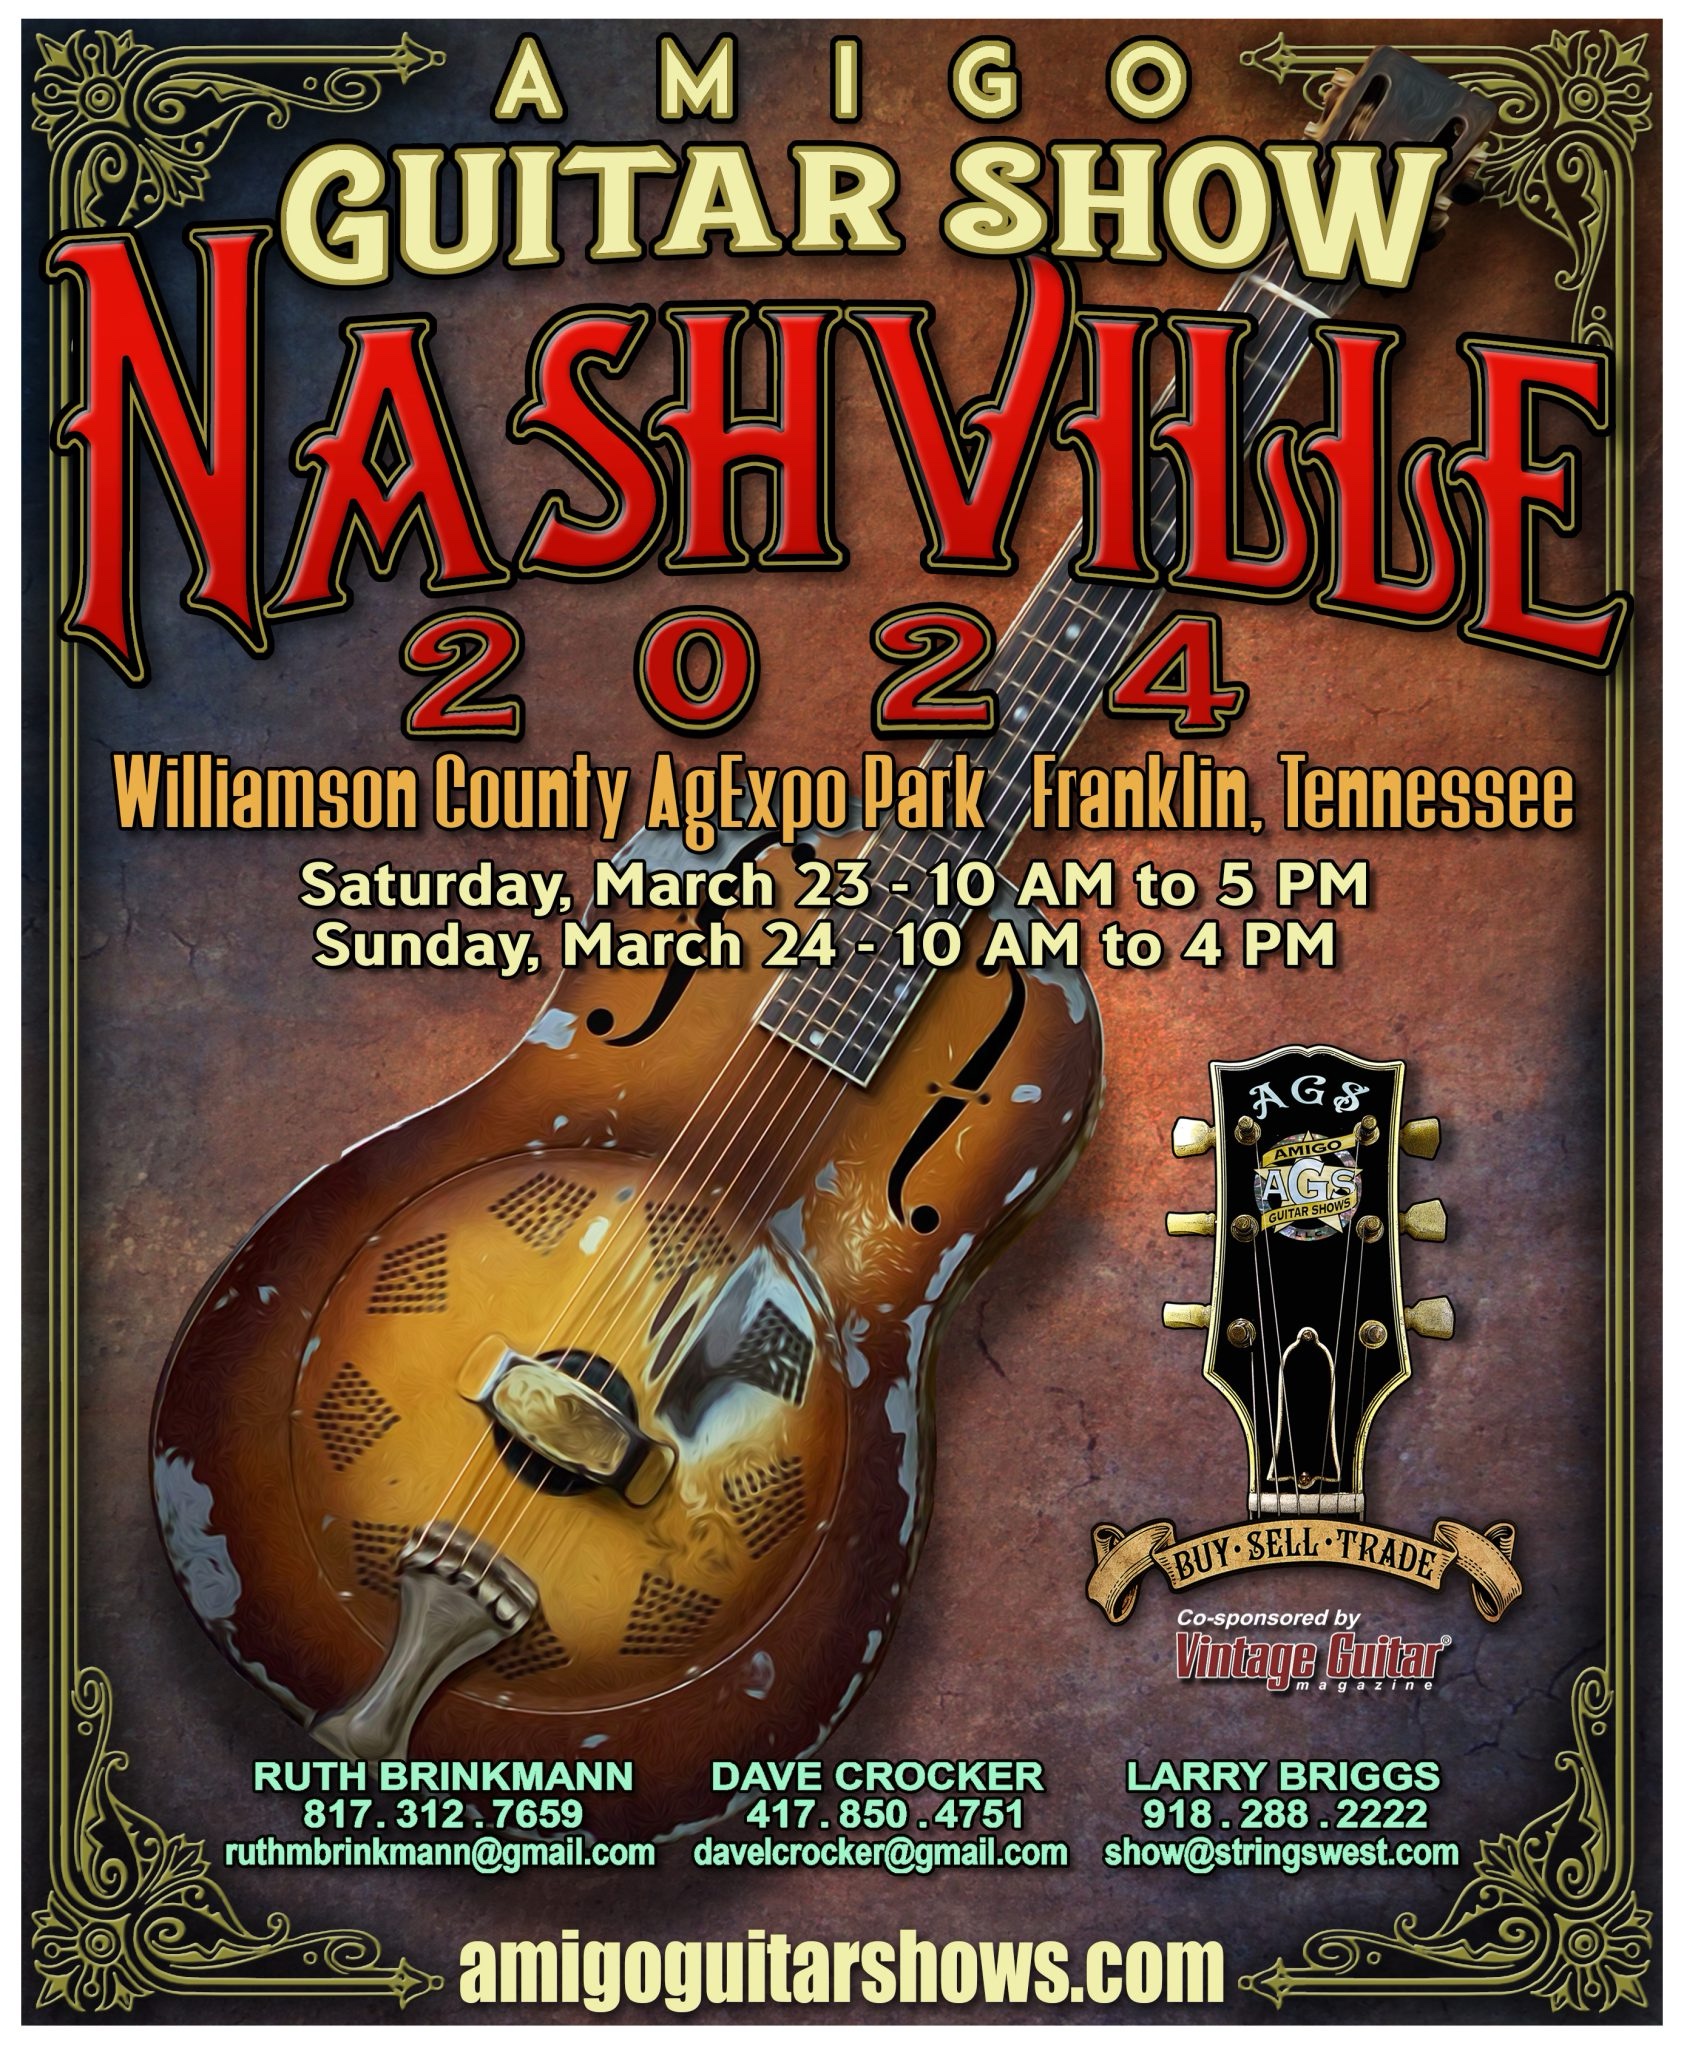 Amigo Guitar Show Nashville 2024_Franklin, TN Williamson County AG Expo Park.